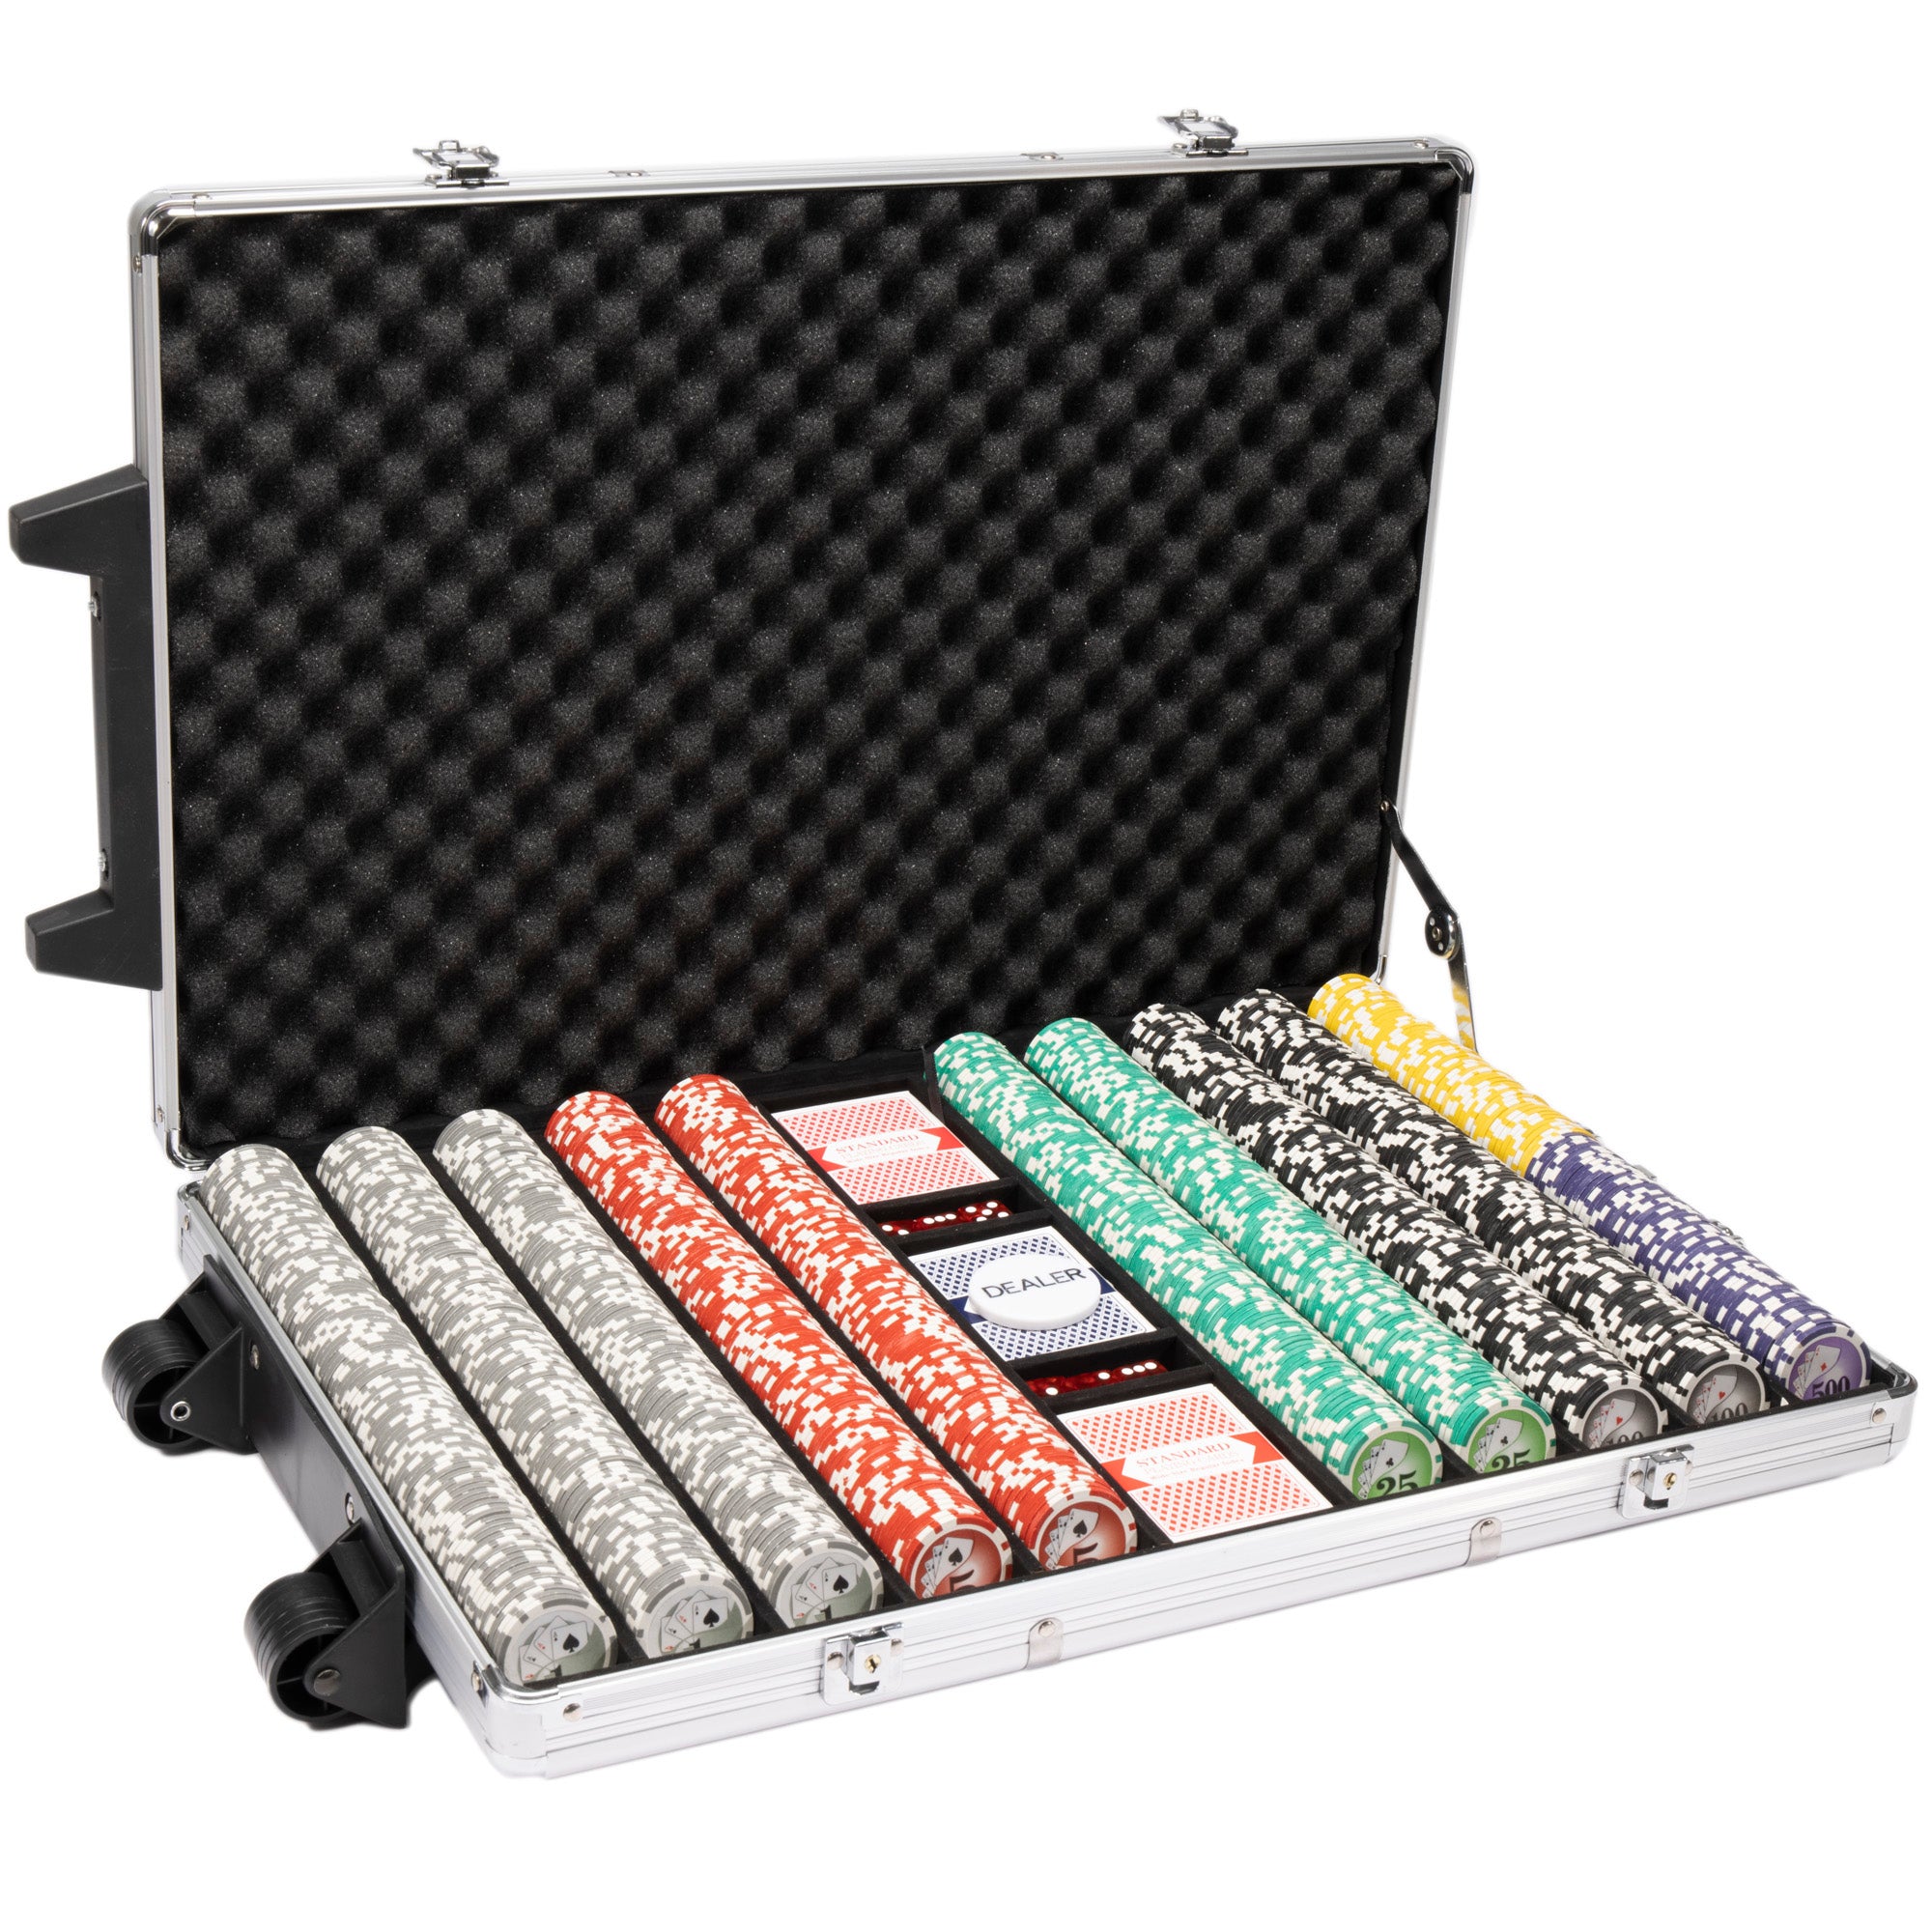 Las Vegas 14-gram Poker Chip Set in Rolling Aluminum Case (1000 Count) - Clay Composite